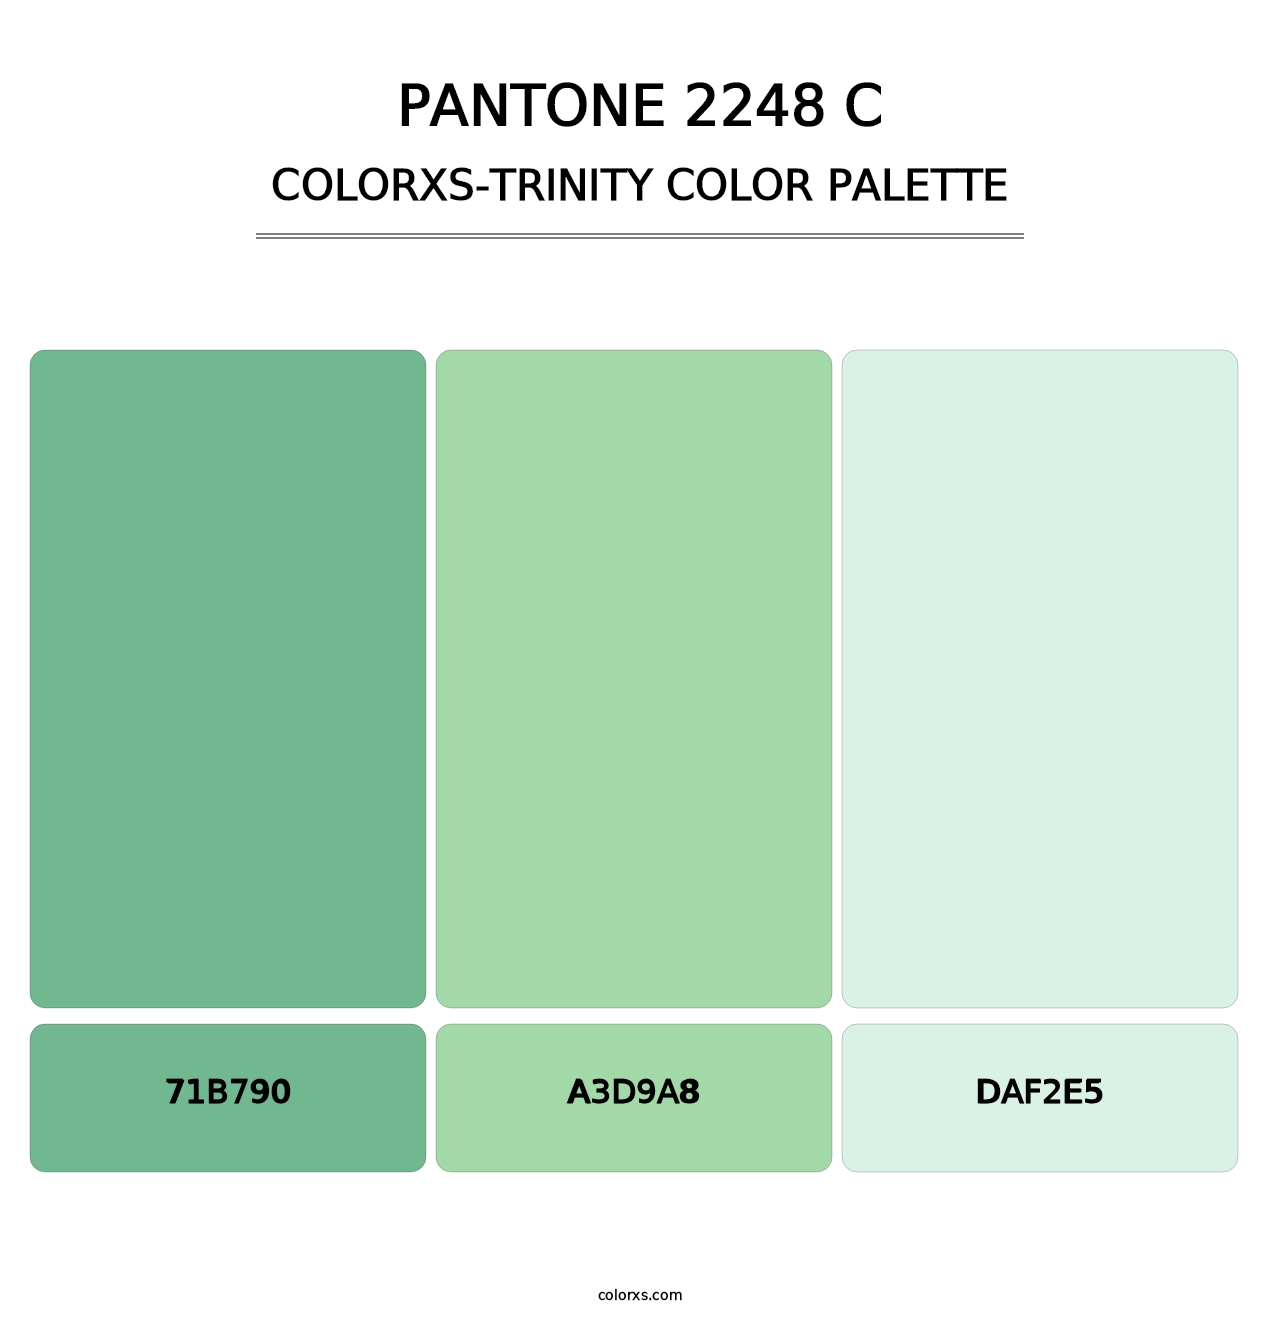 PANTONE 2248 C - Colorxs Trinity Palette